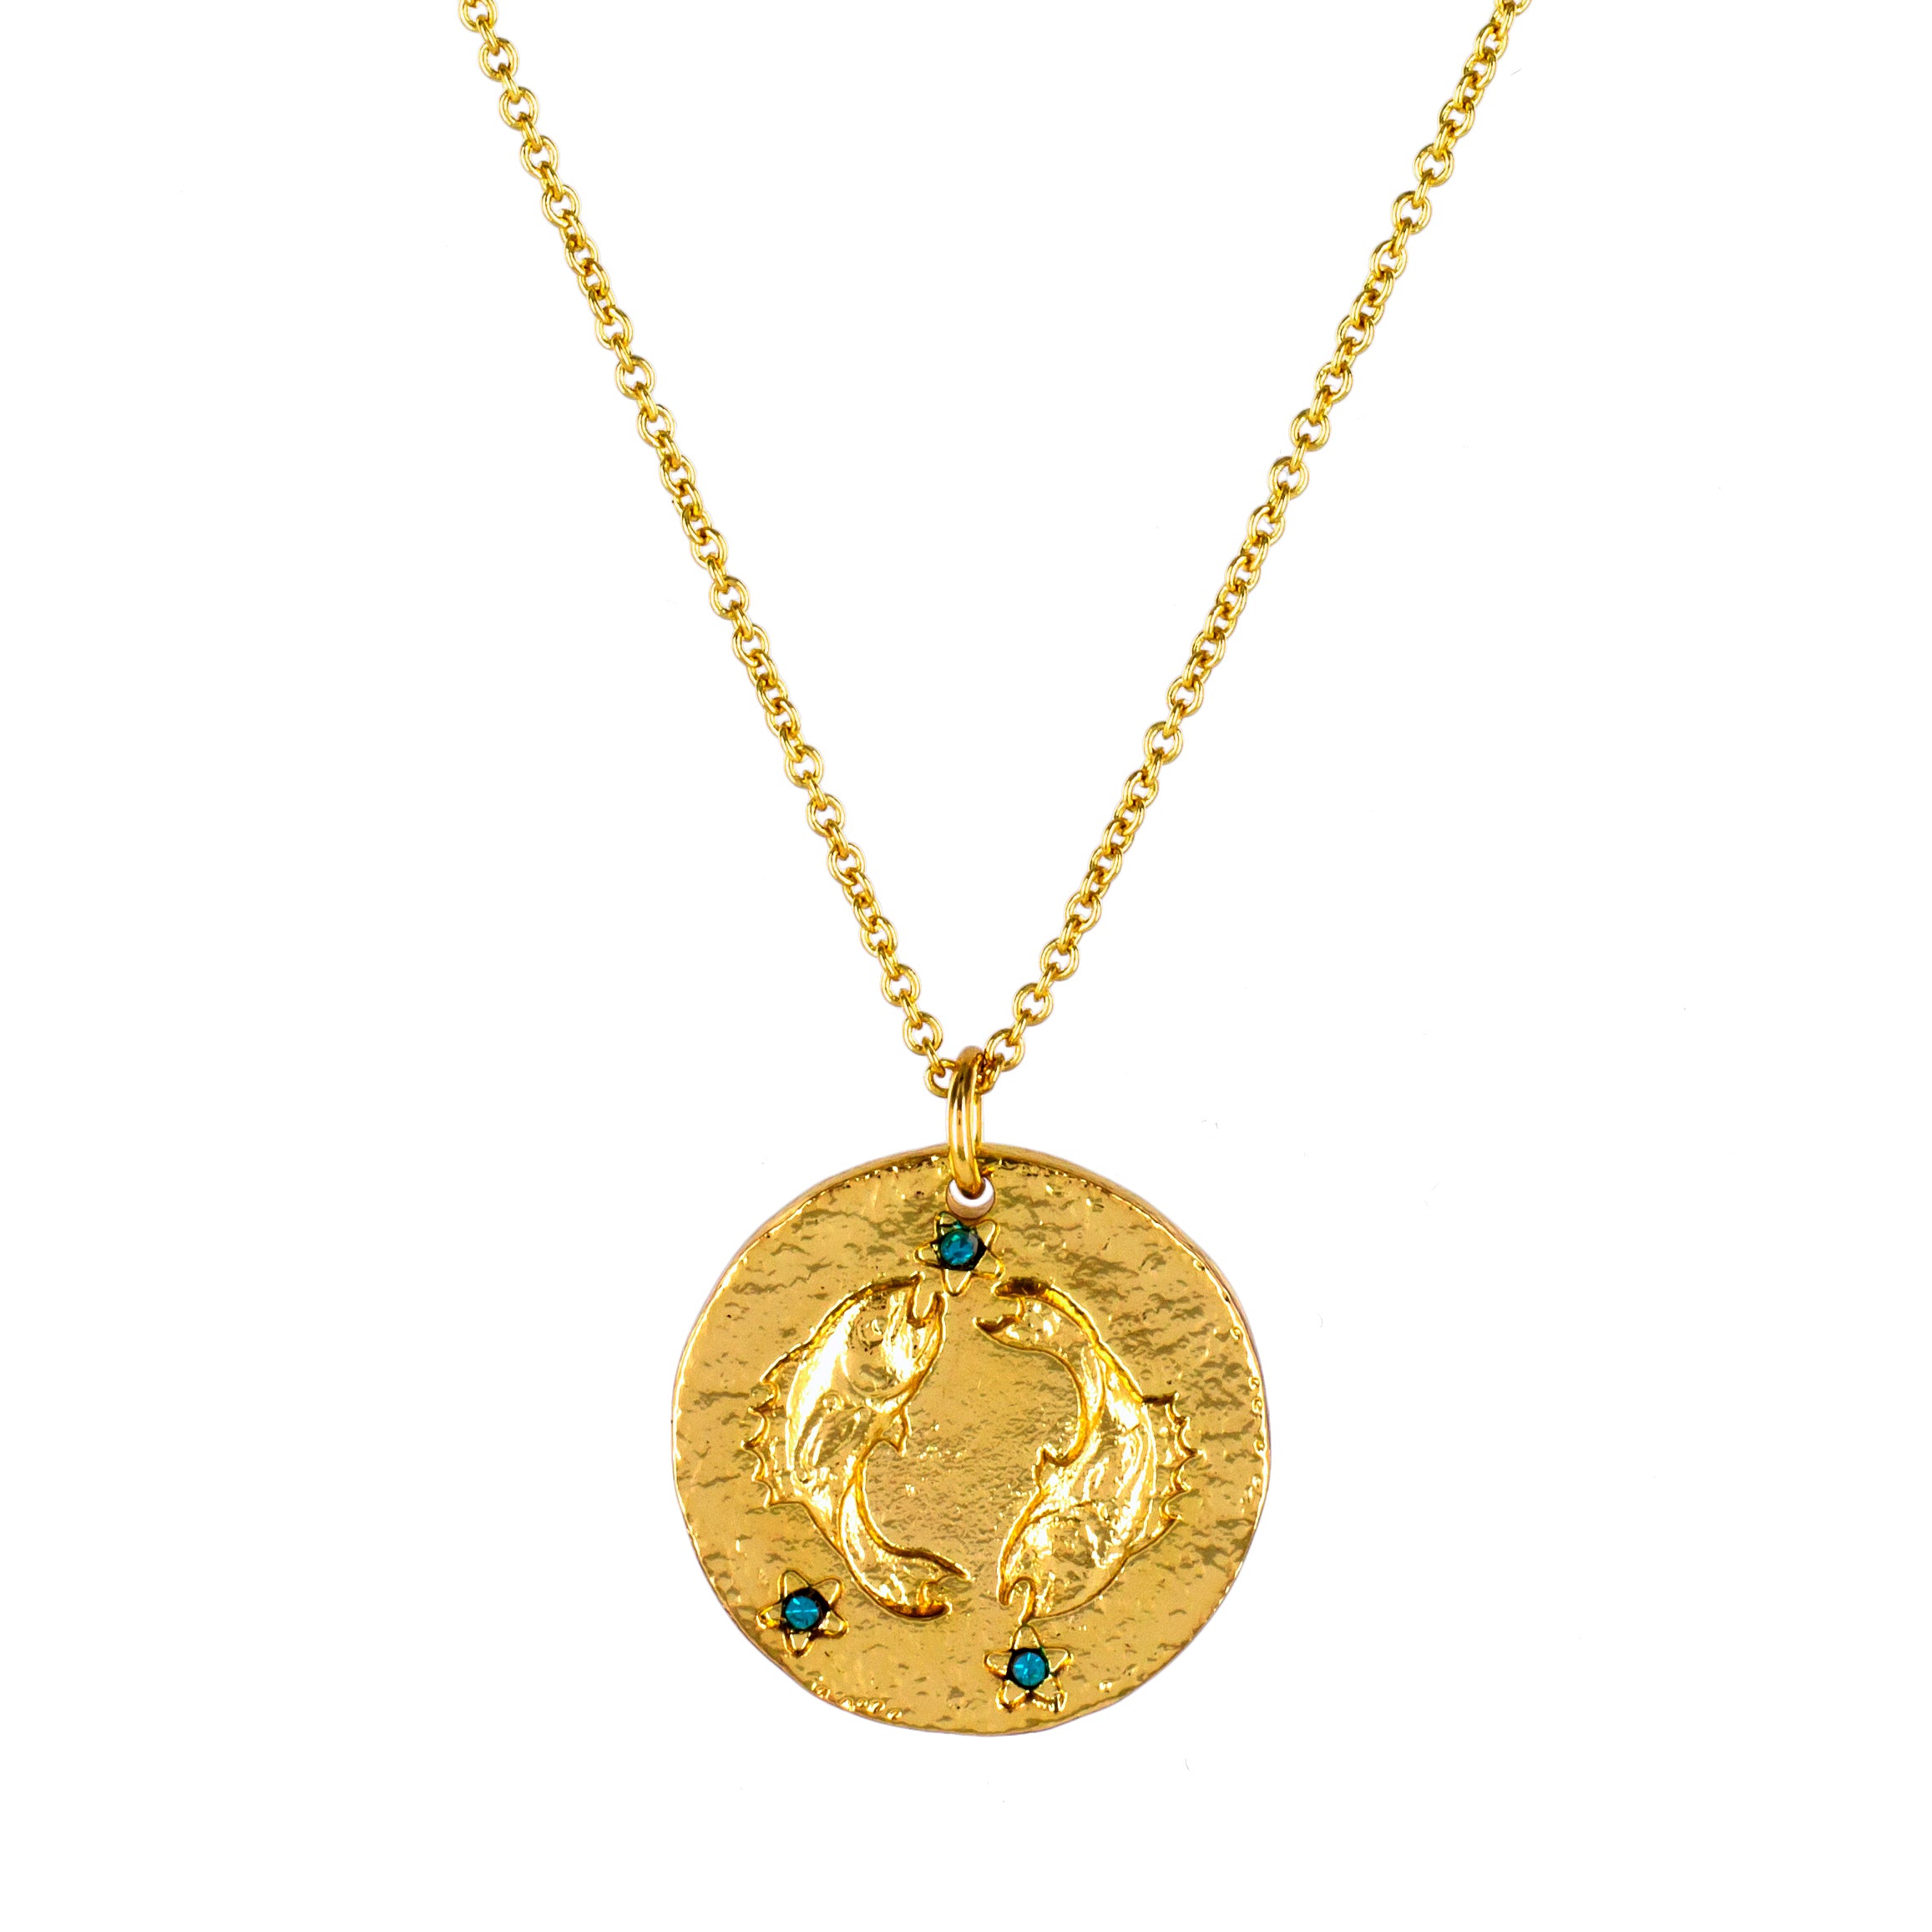 astrologie collier poissons- astrodisiac - bijoux - paris - claire naa - jewels - necklace pisces- astrology